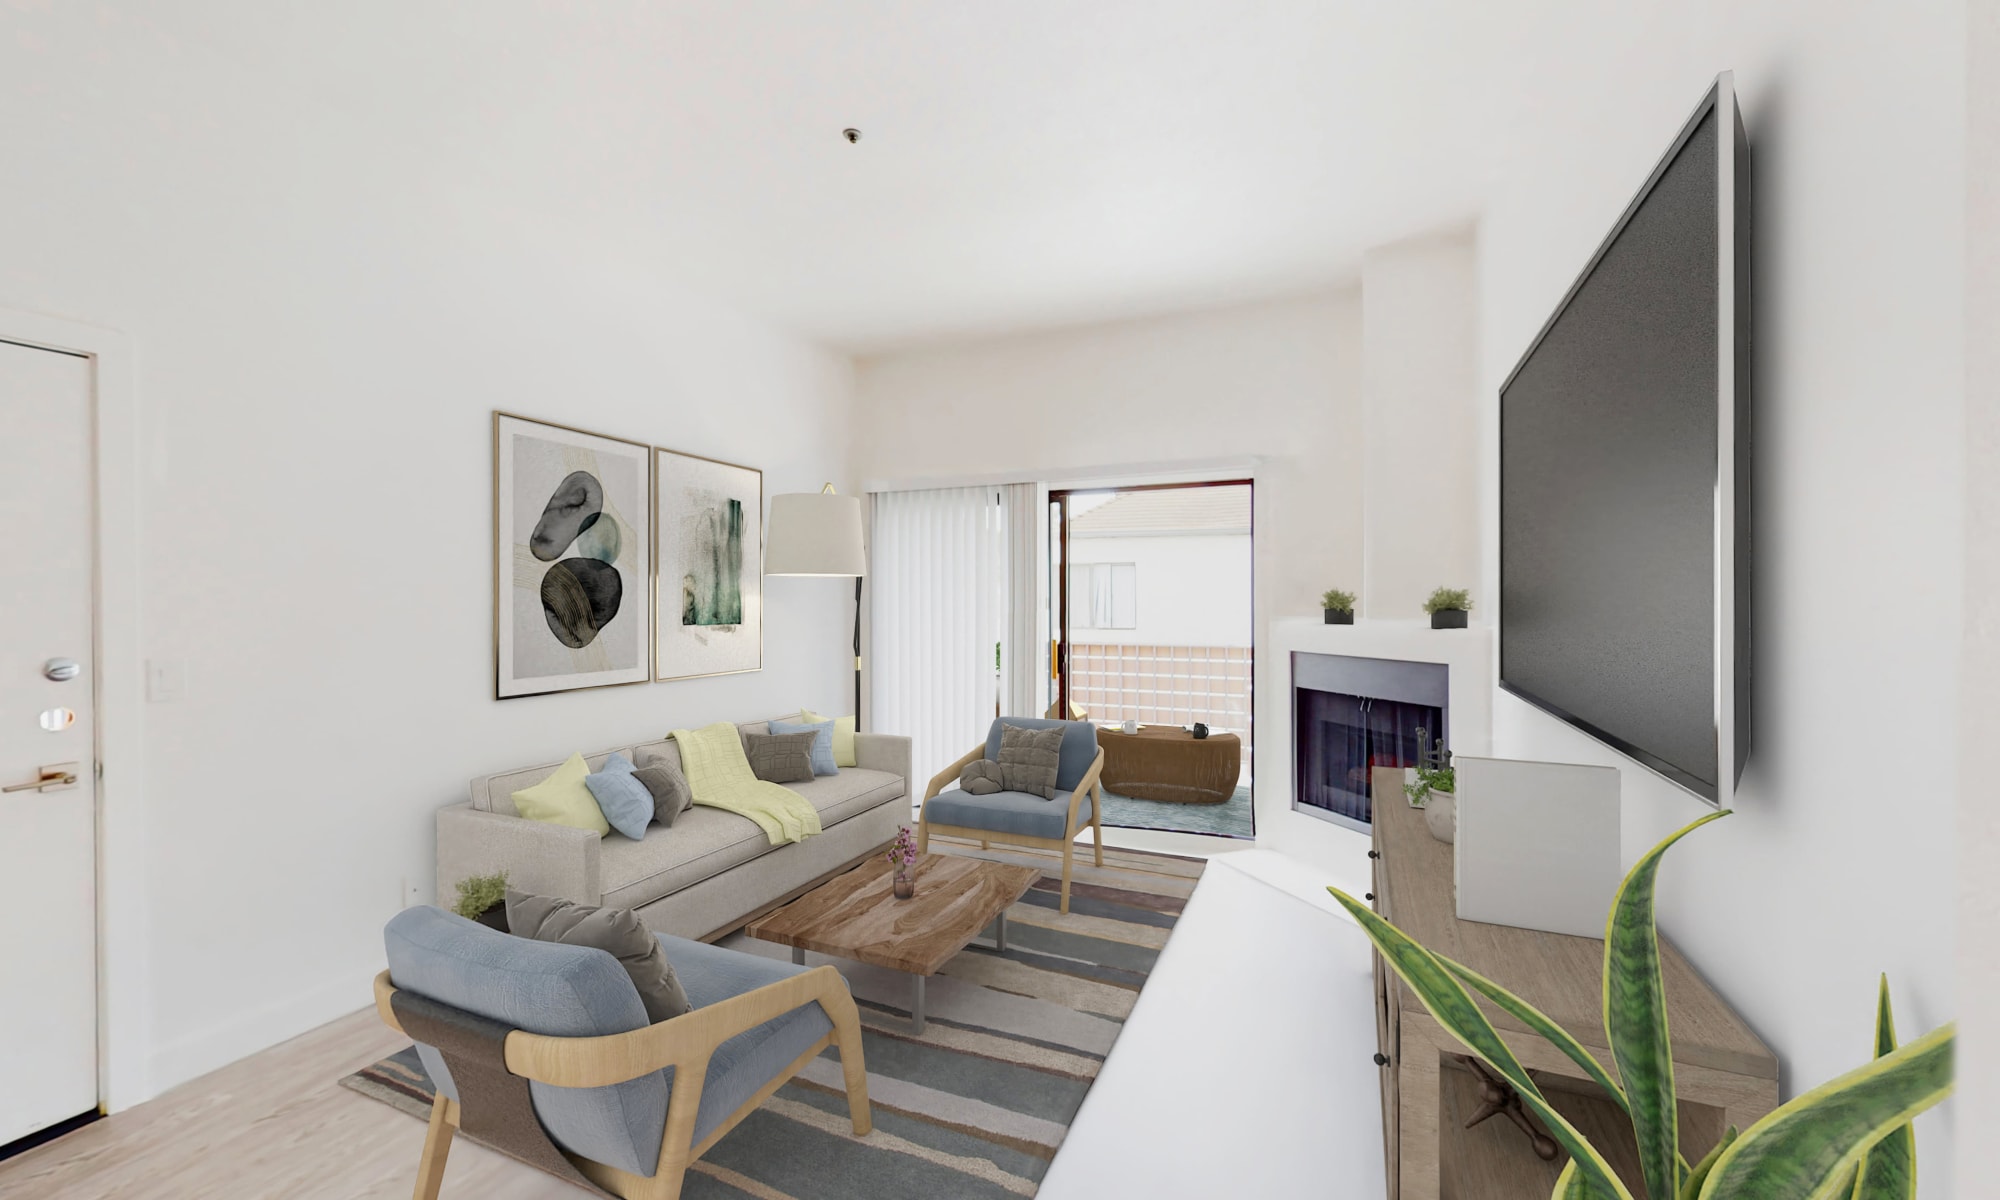 Modern, open, and light floor plan in living room of Sendero one-bedroom